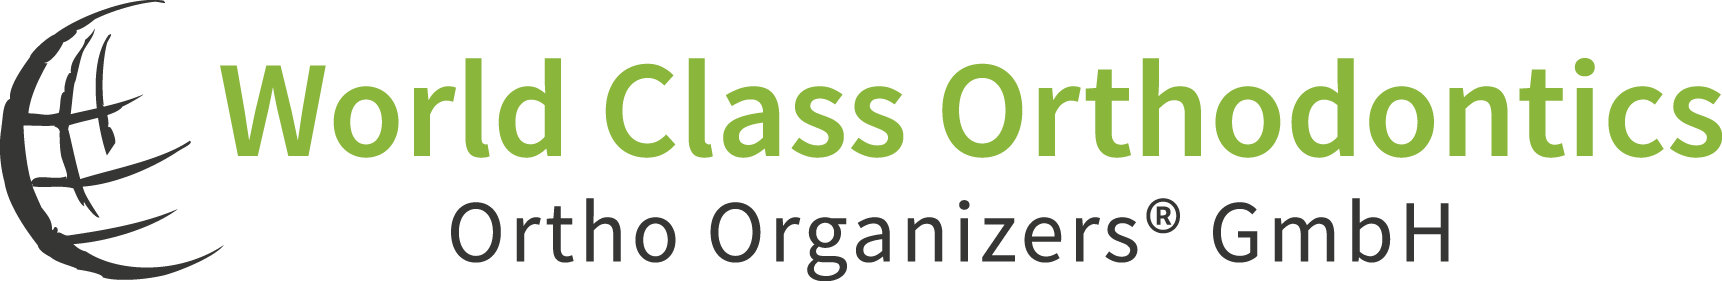 World Class Orthodontics – Ortho Organizers GmbH Logo